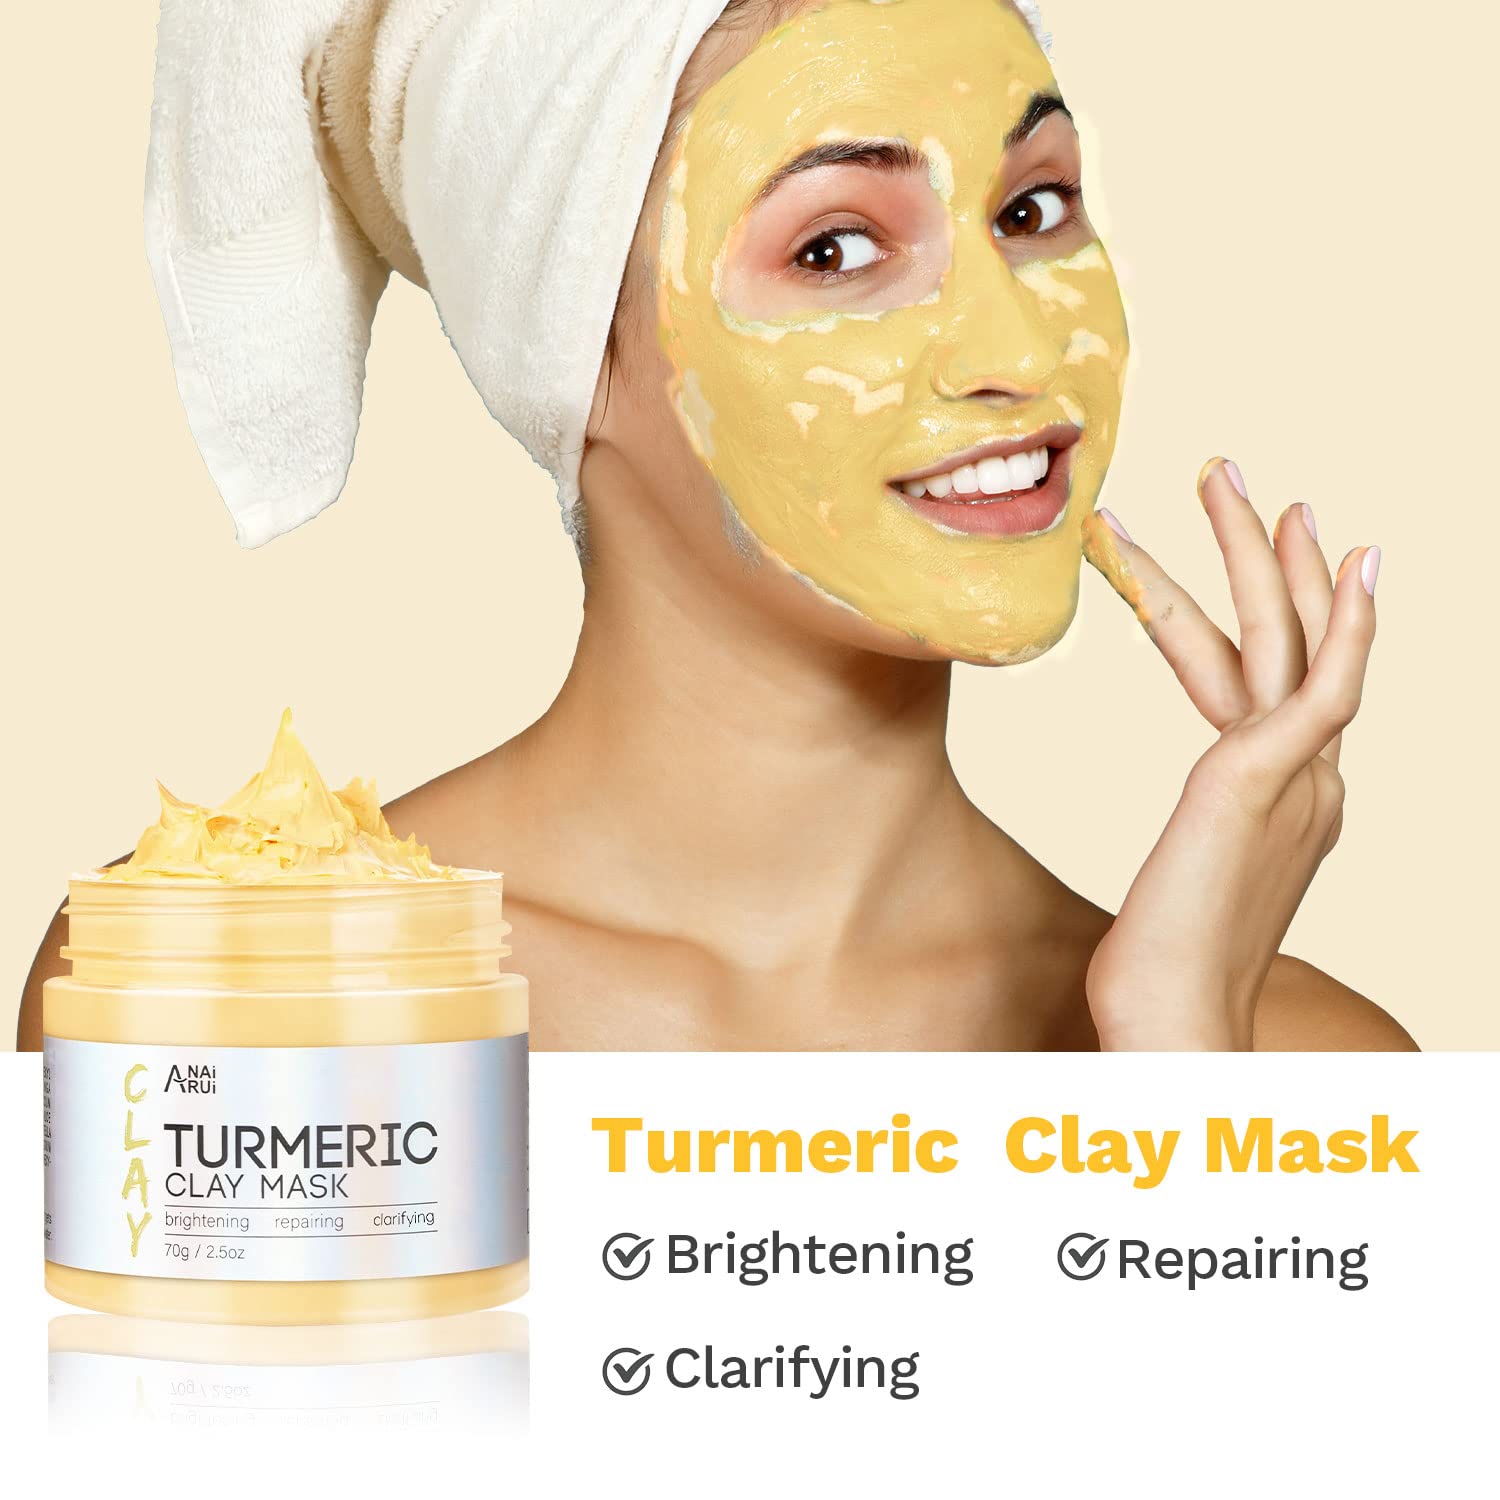 Turmeric Clay Mask, Green Tea and Dead Sea Minerals, Spa Facial Mask Set 2.5 oz each